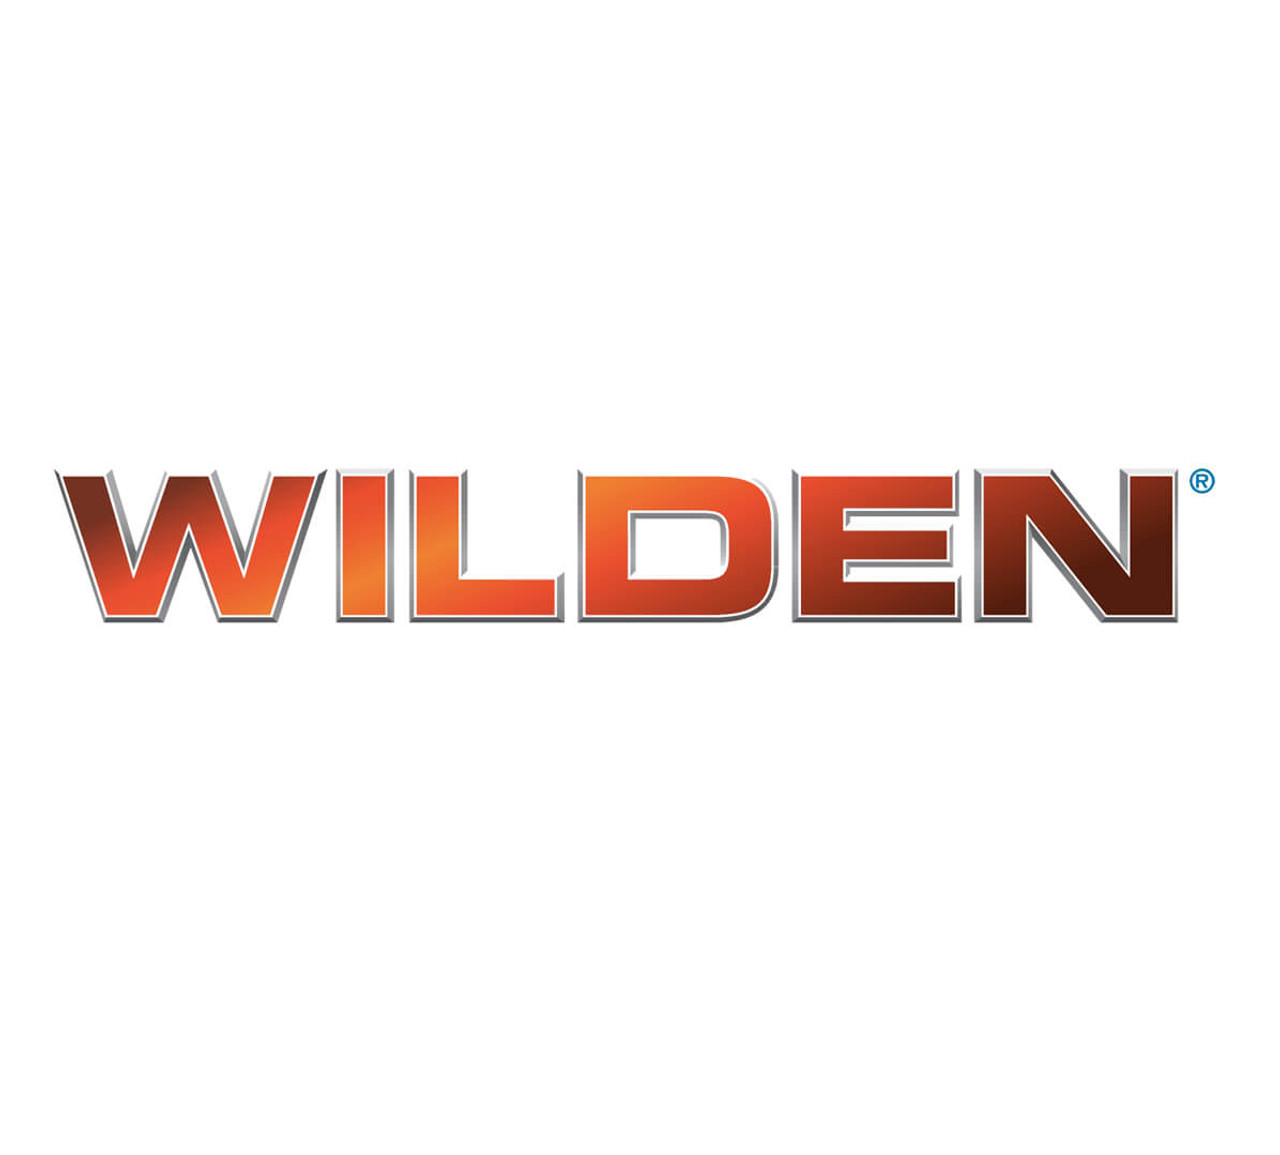 Wilden Wet End Kit 02-9815-55-202